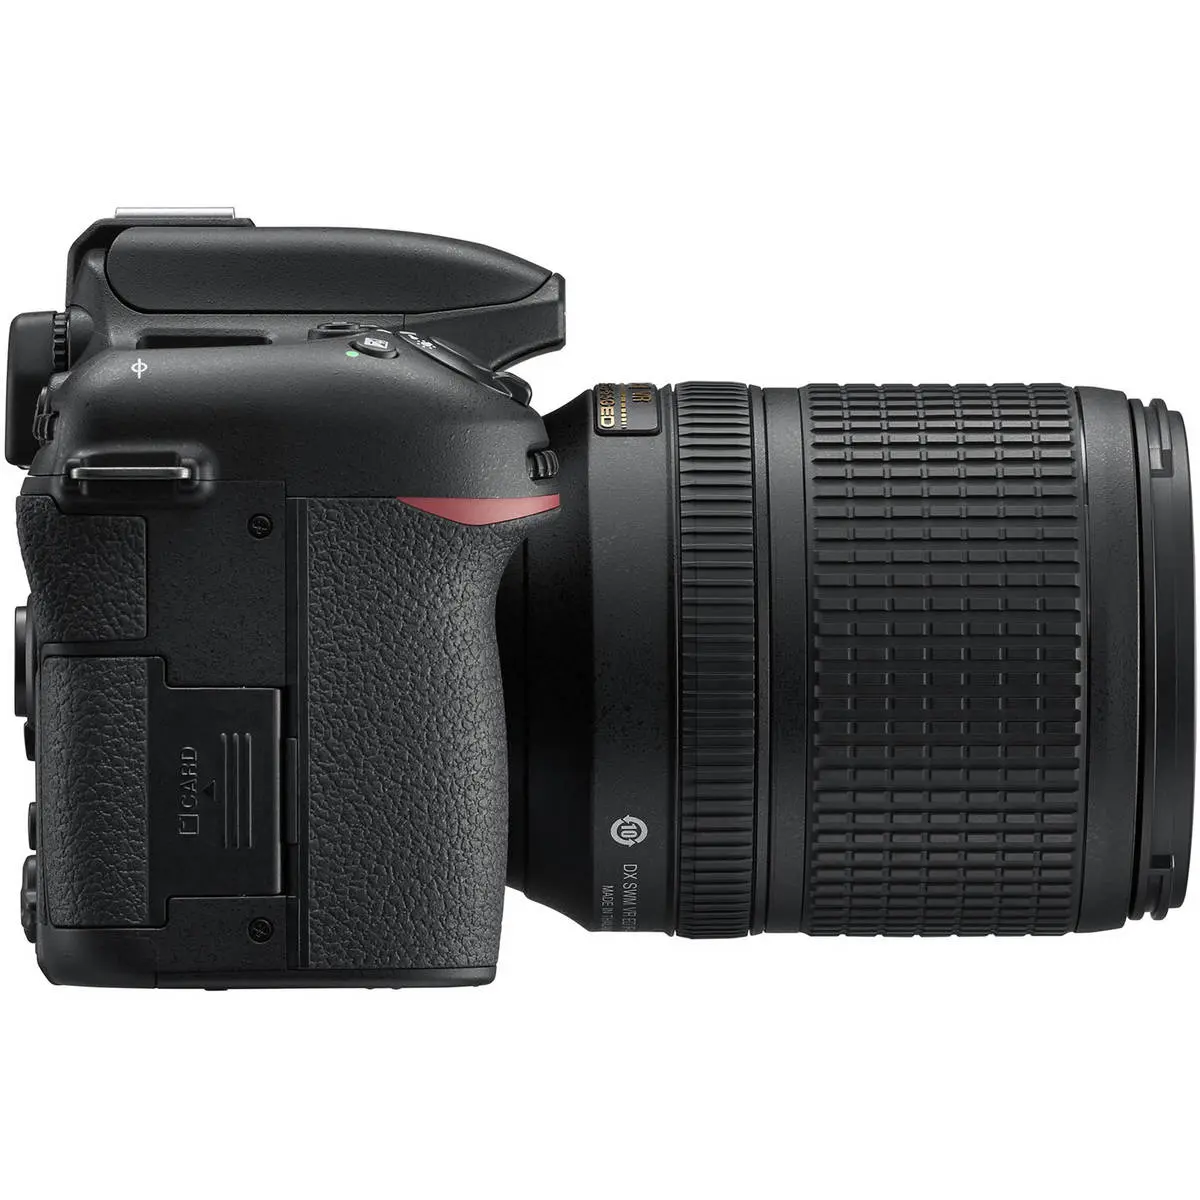 Nikon - D7500 2 Lens Outfit DSLR Camera